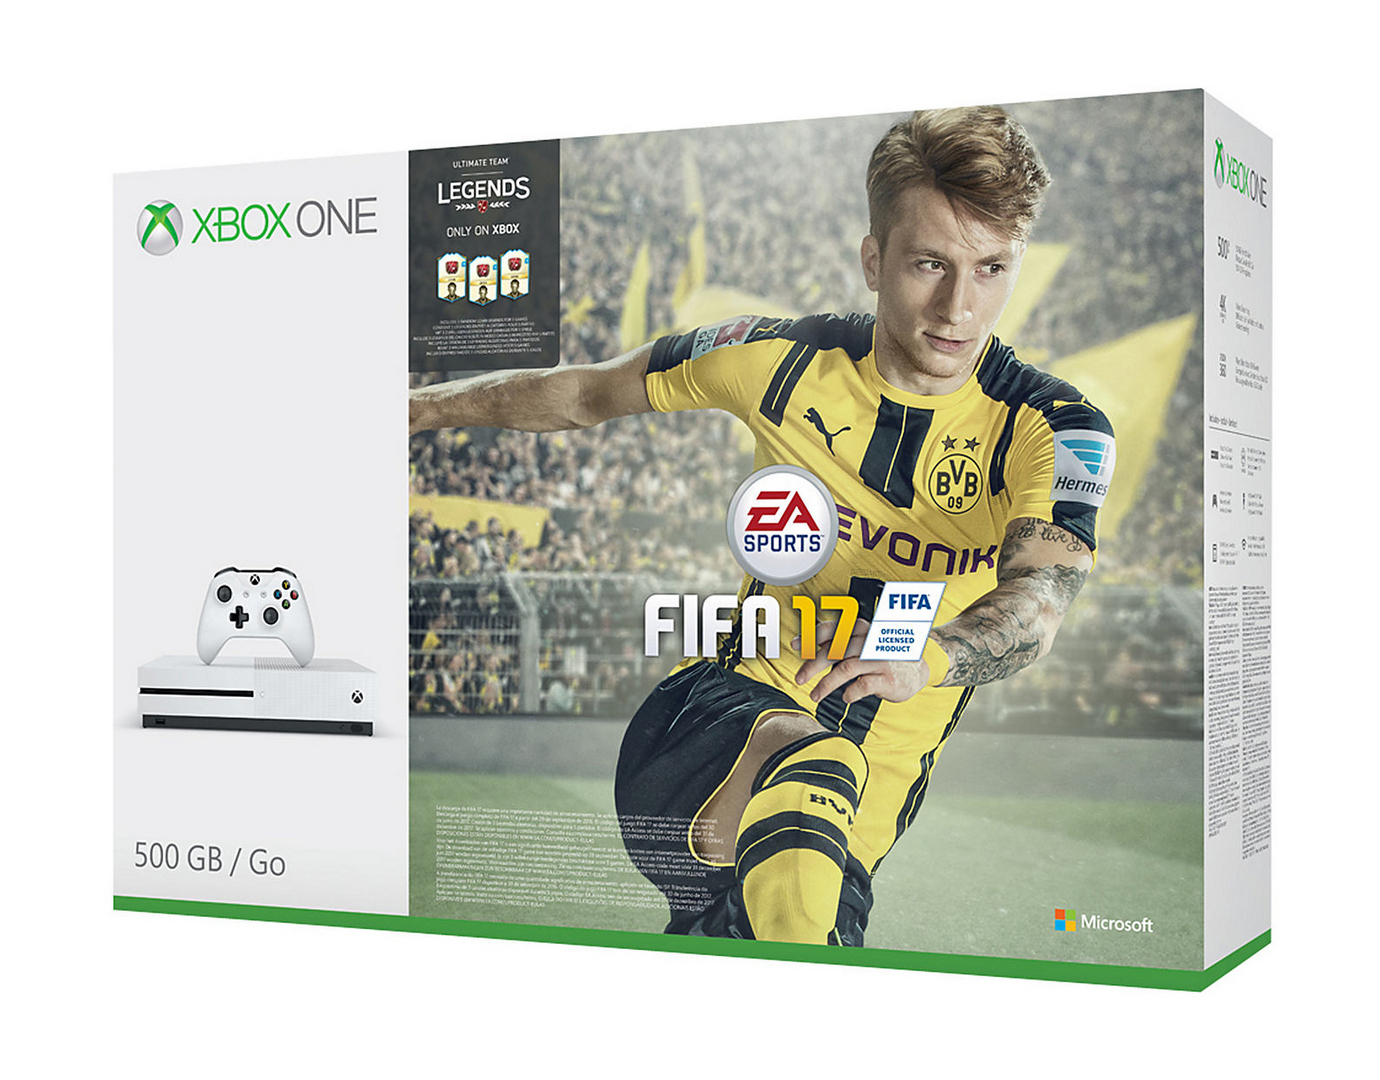 Xbox One S 500 GB - FIFA 17 Digital Download Bundle